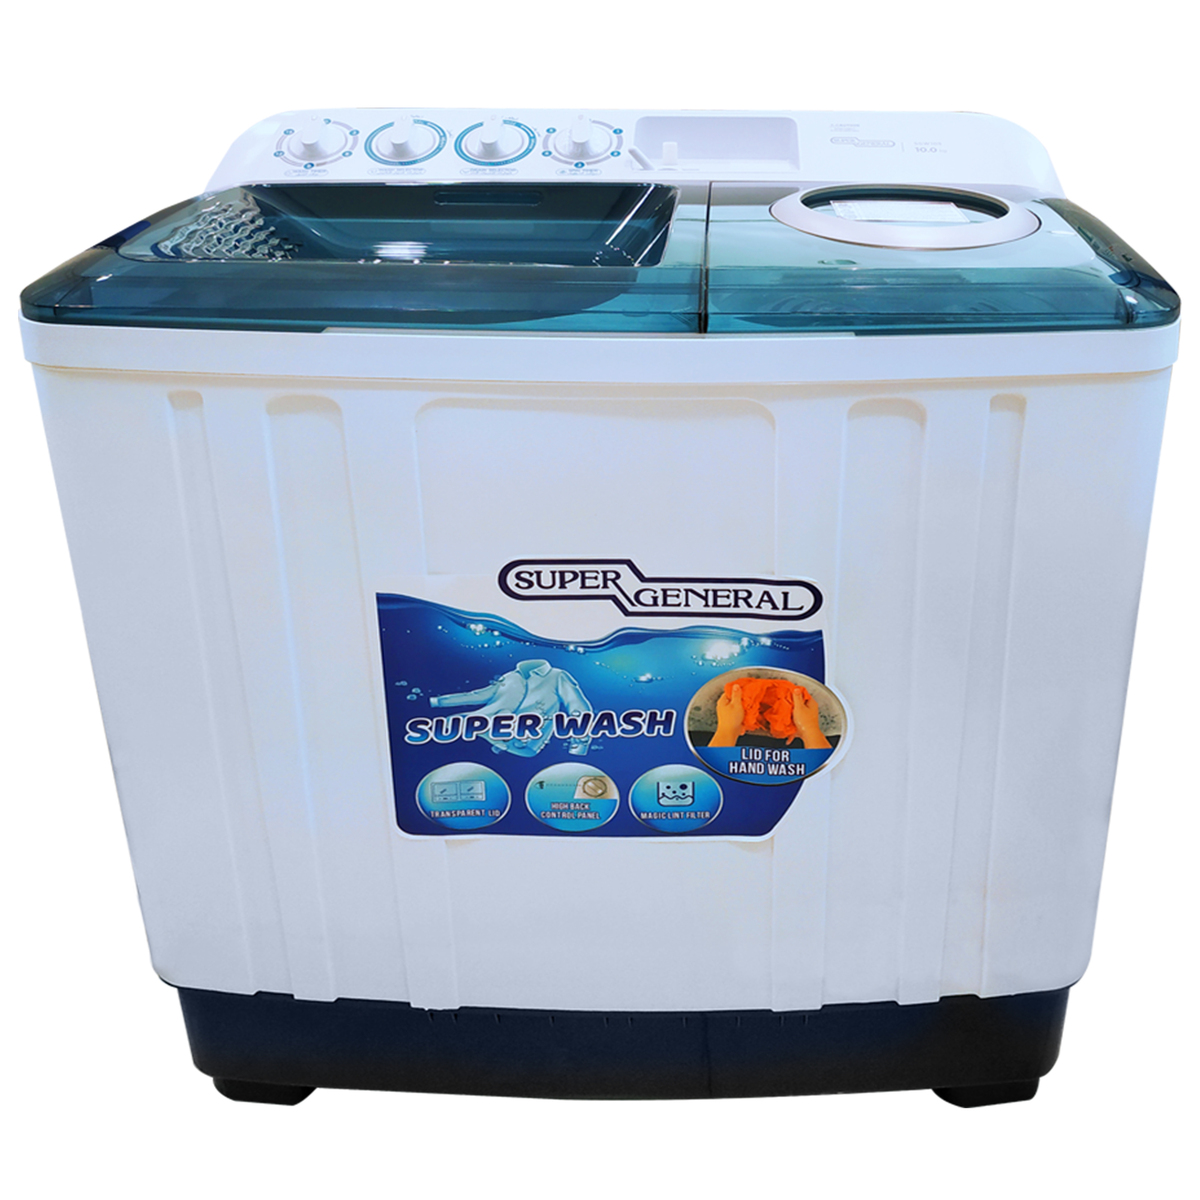 Super General 14 Kg Top Load Twin-Tub Semi-Automatic Washing Machine, White/Blue, SGW155